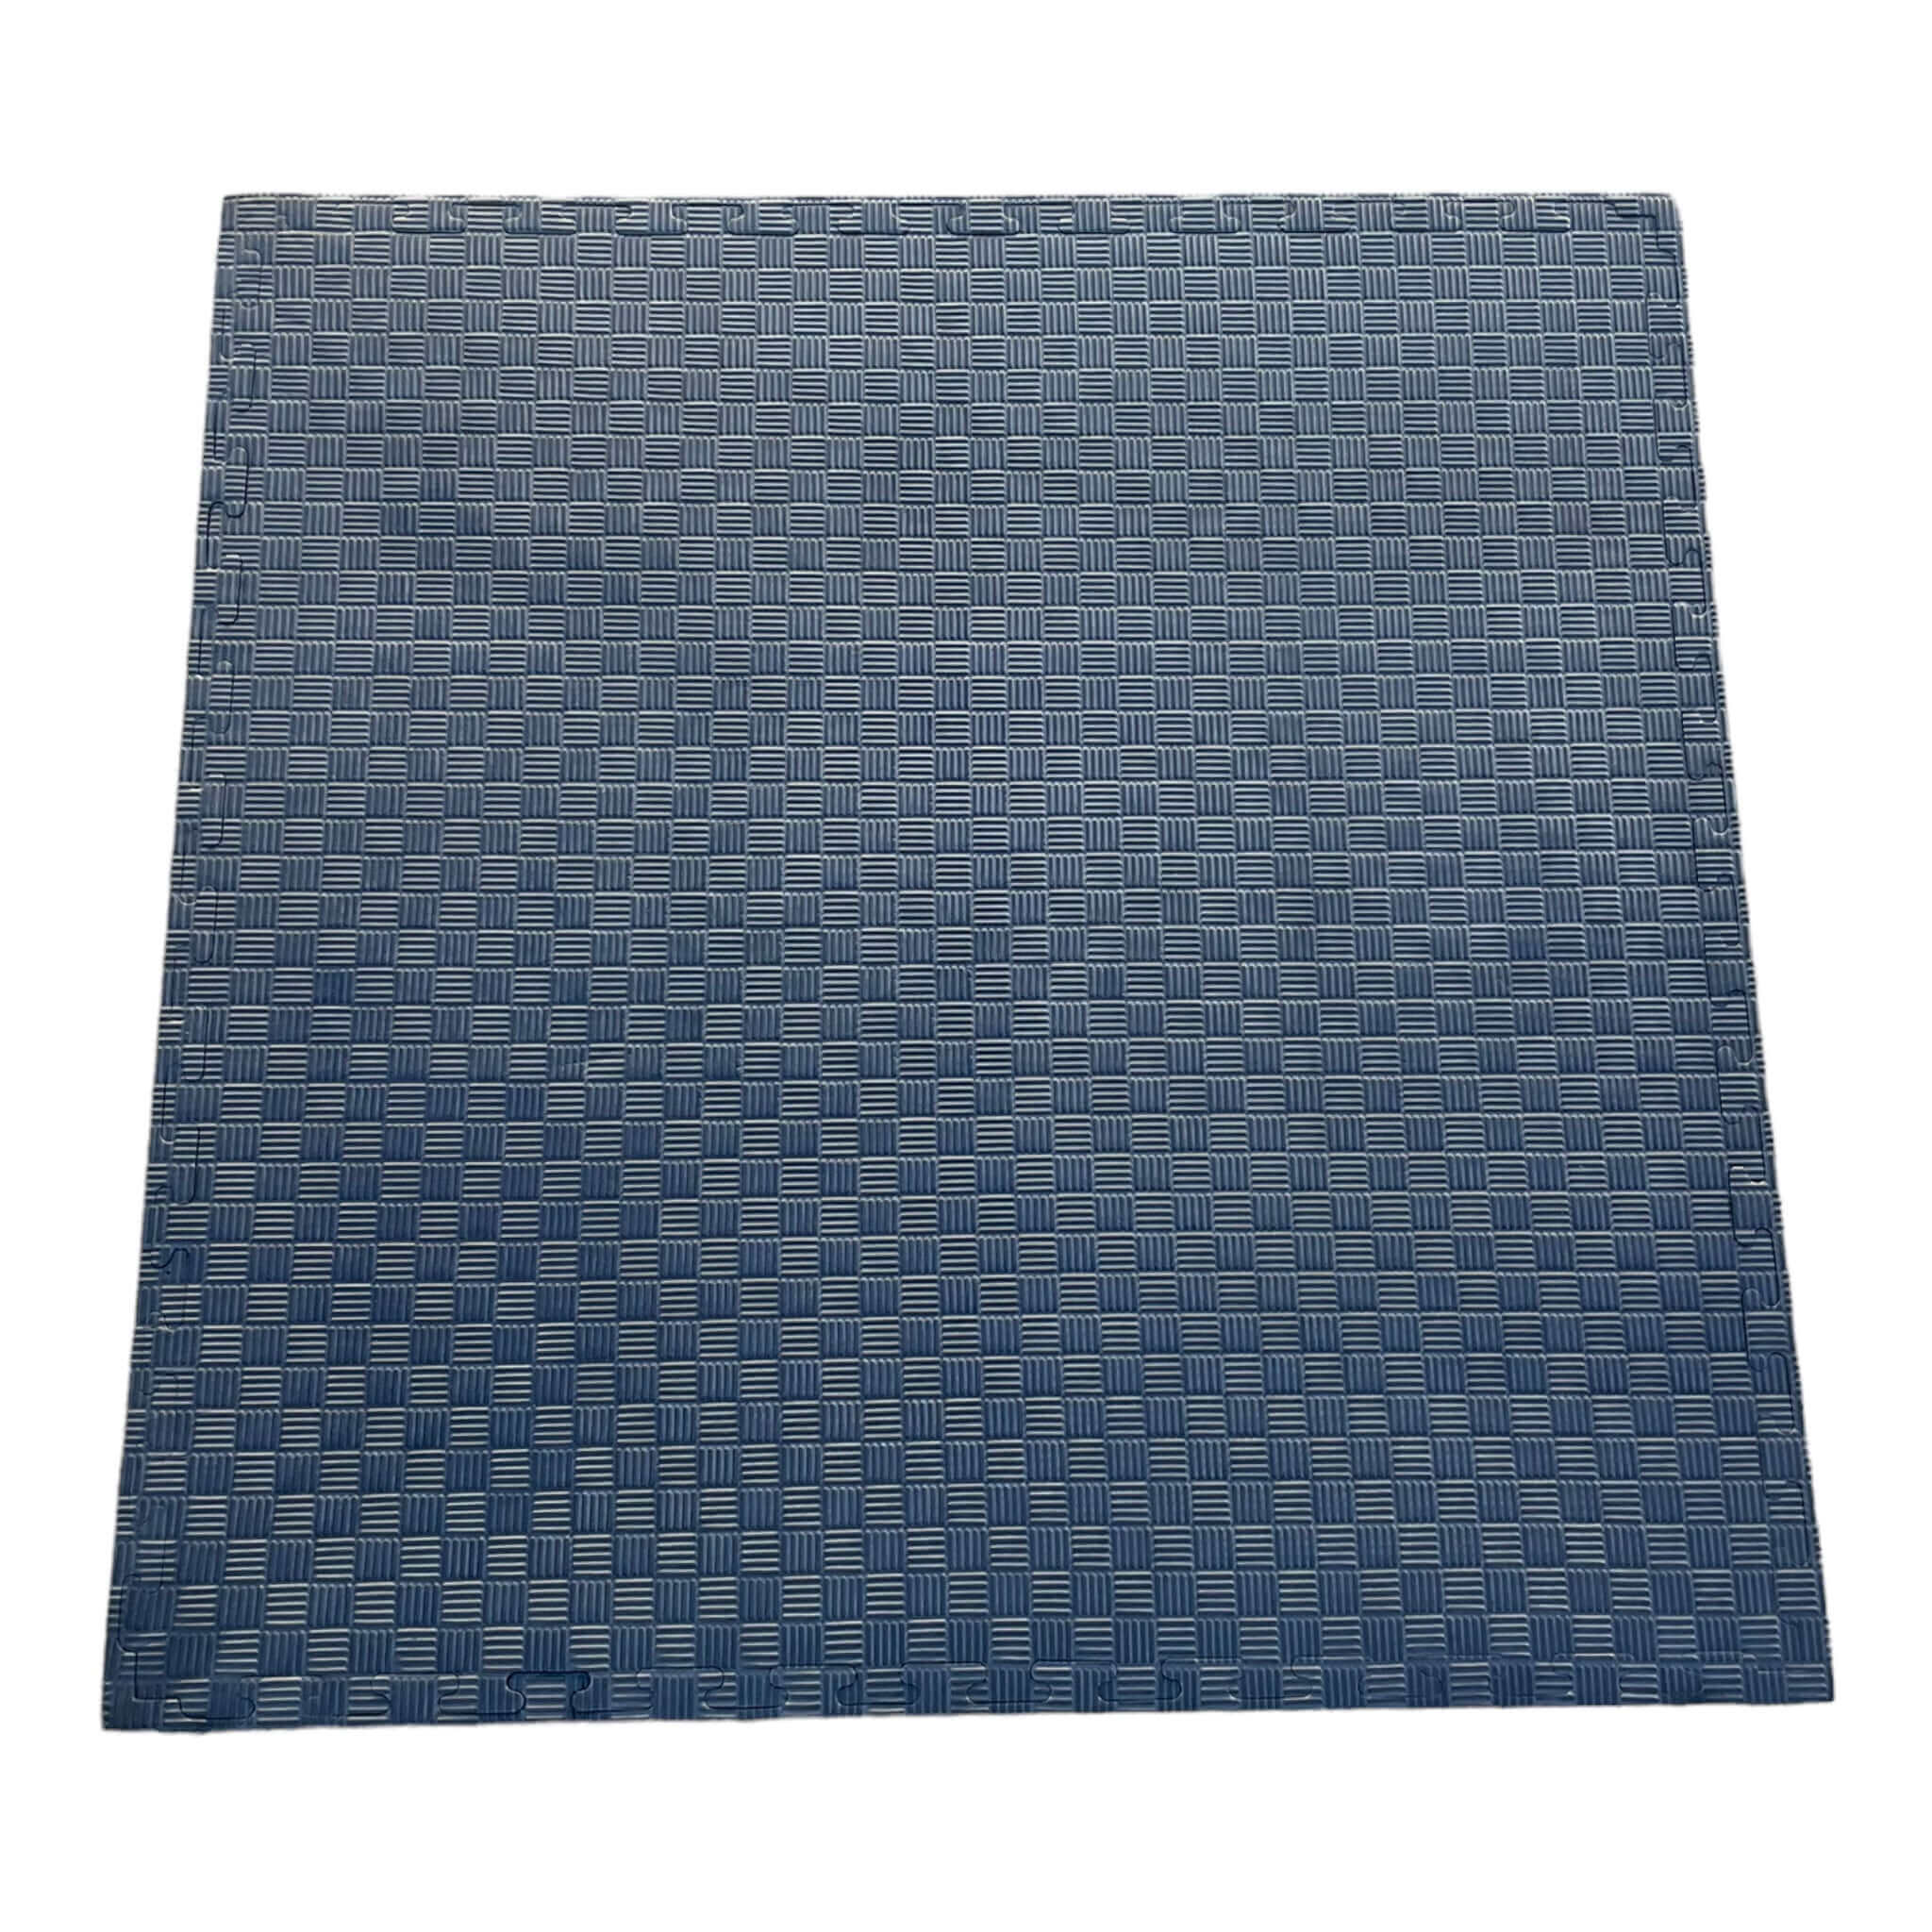 40mm EVA Foam Jigsaw Interlocking Floor Tile Mat 1m x 1m BLACK / GREY | INSOURCE